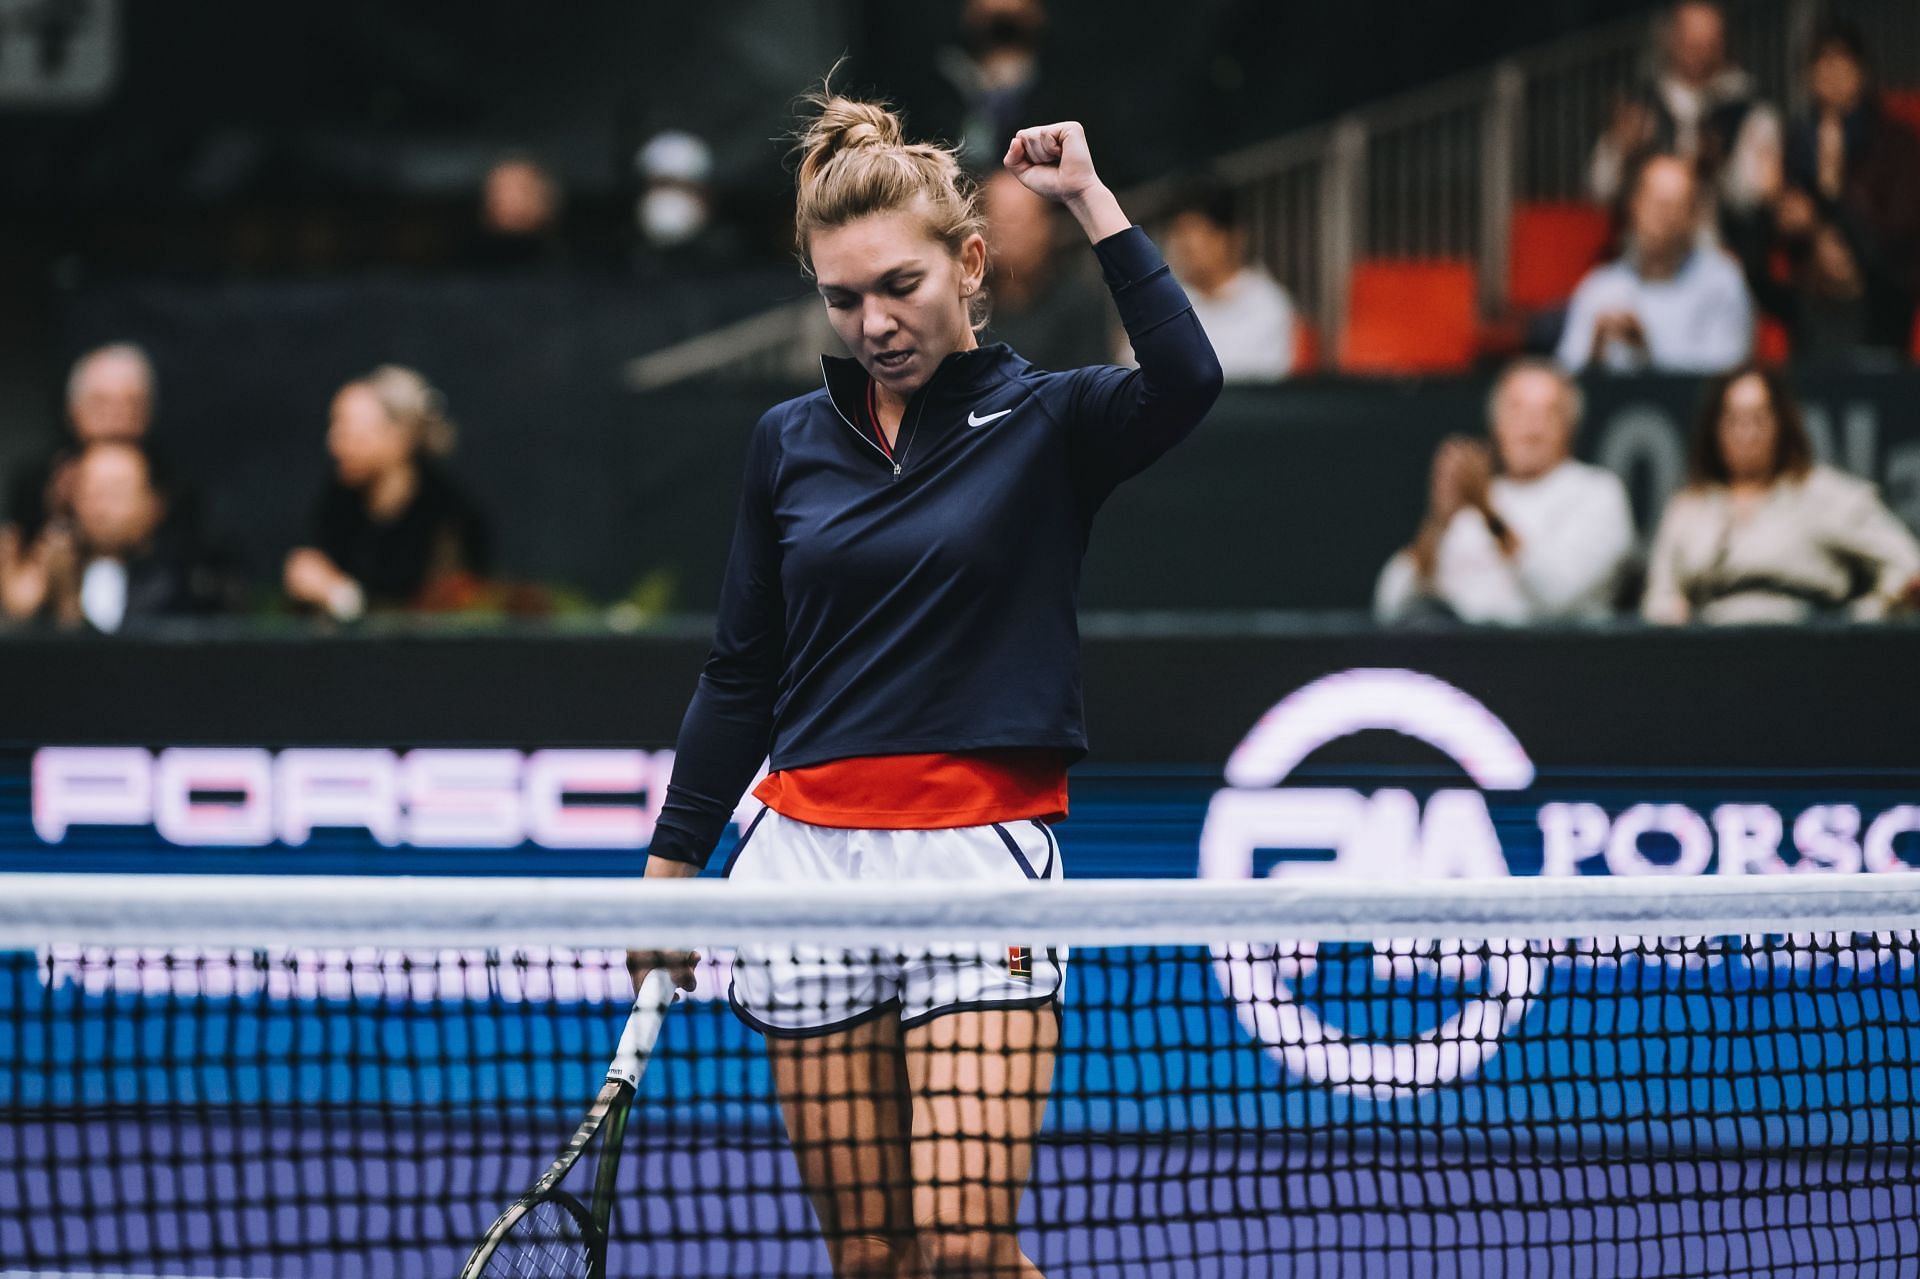 Simona Halep at the 2021 Linz Open